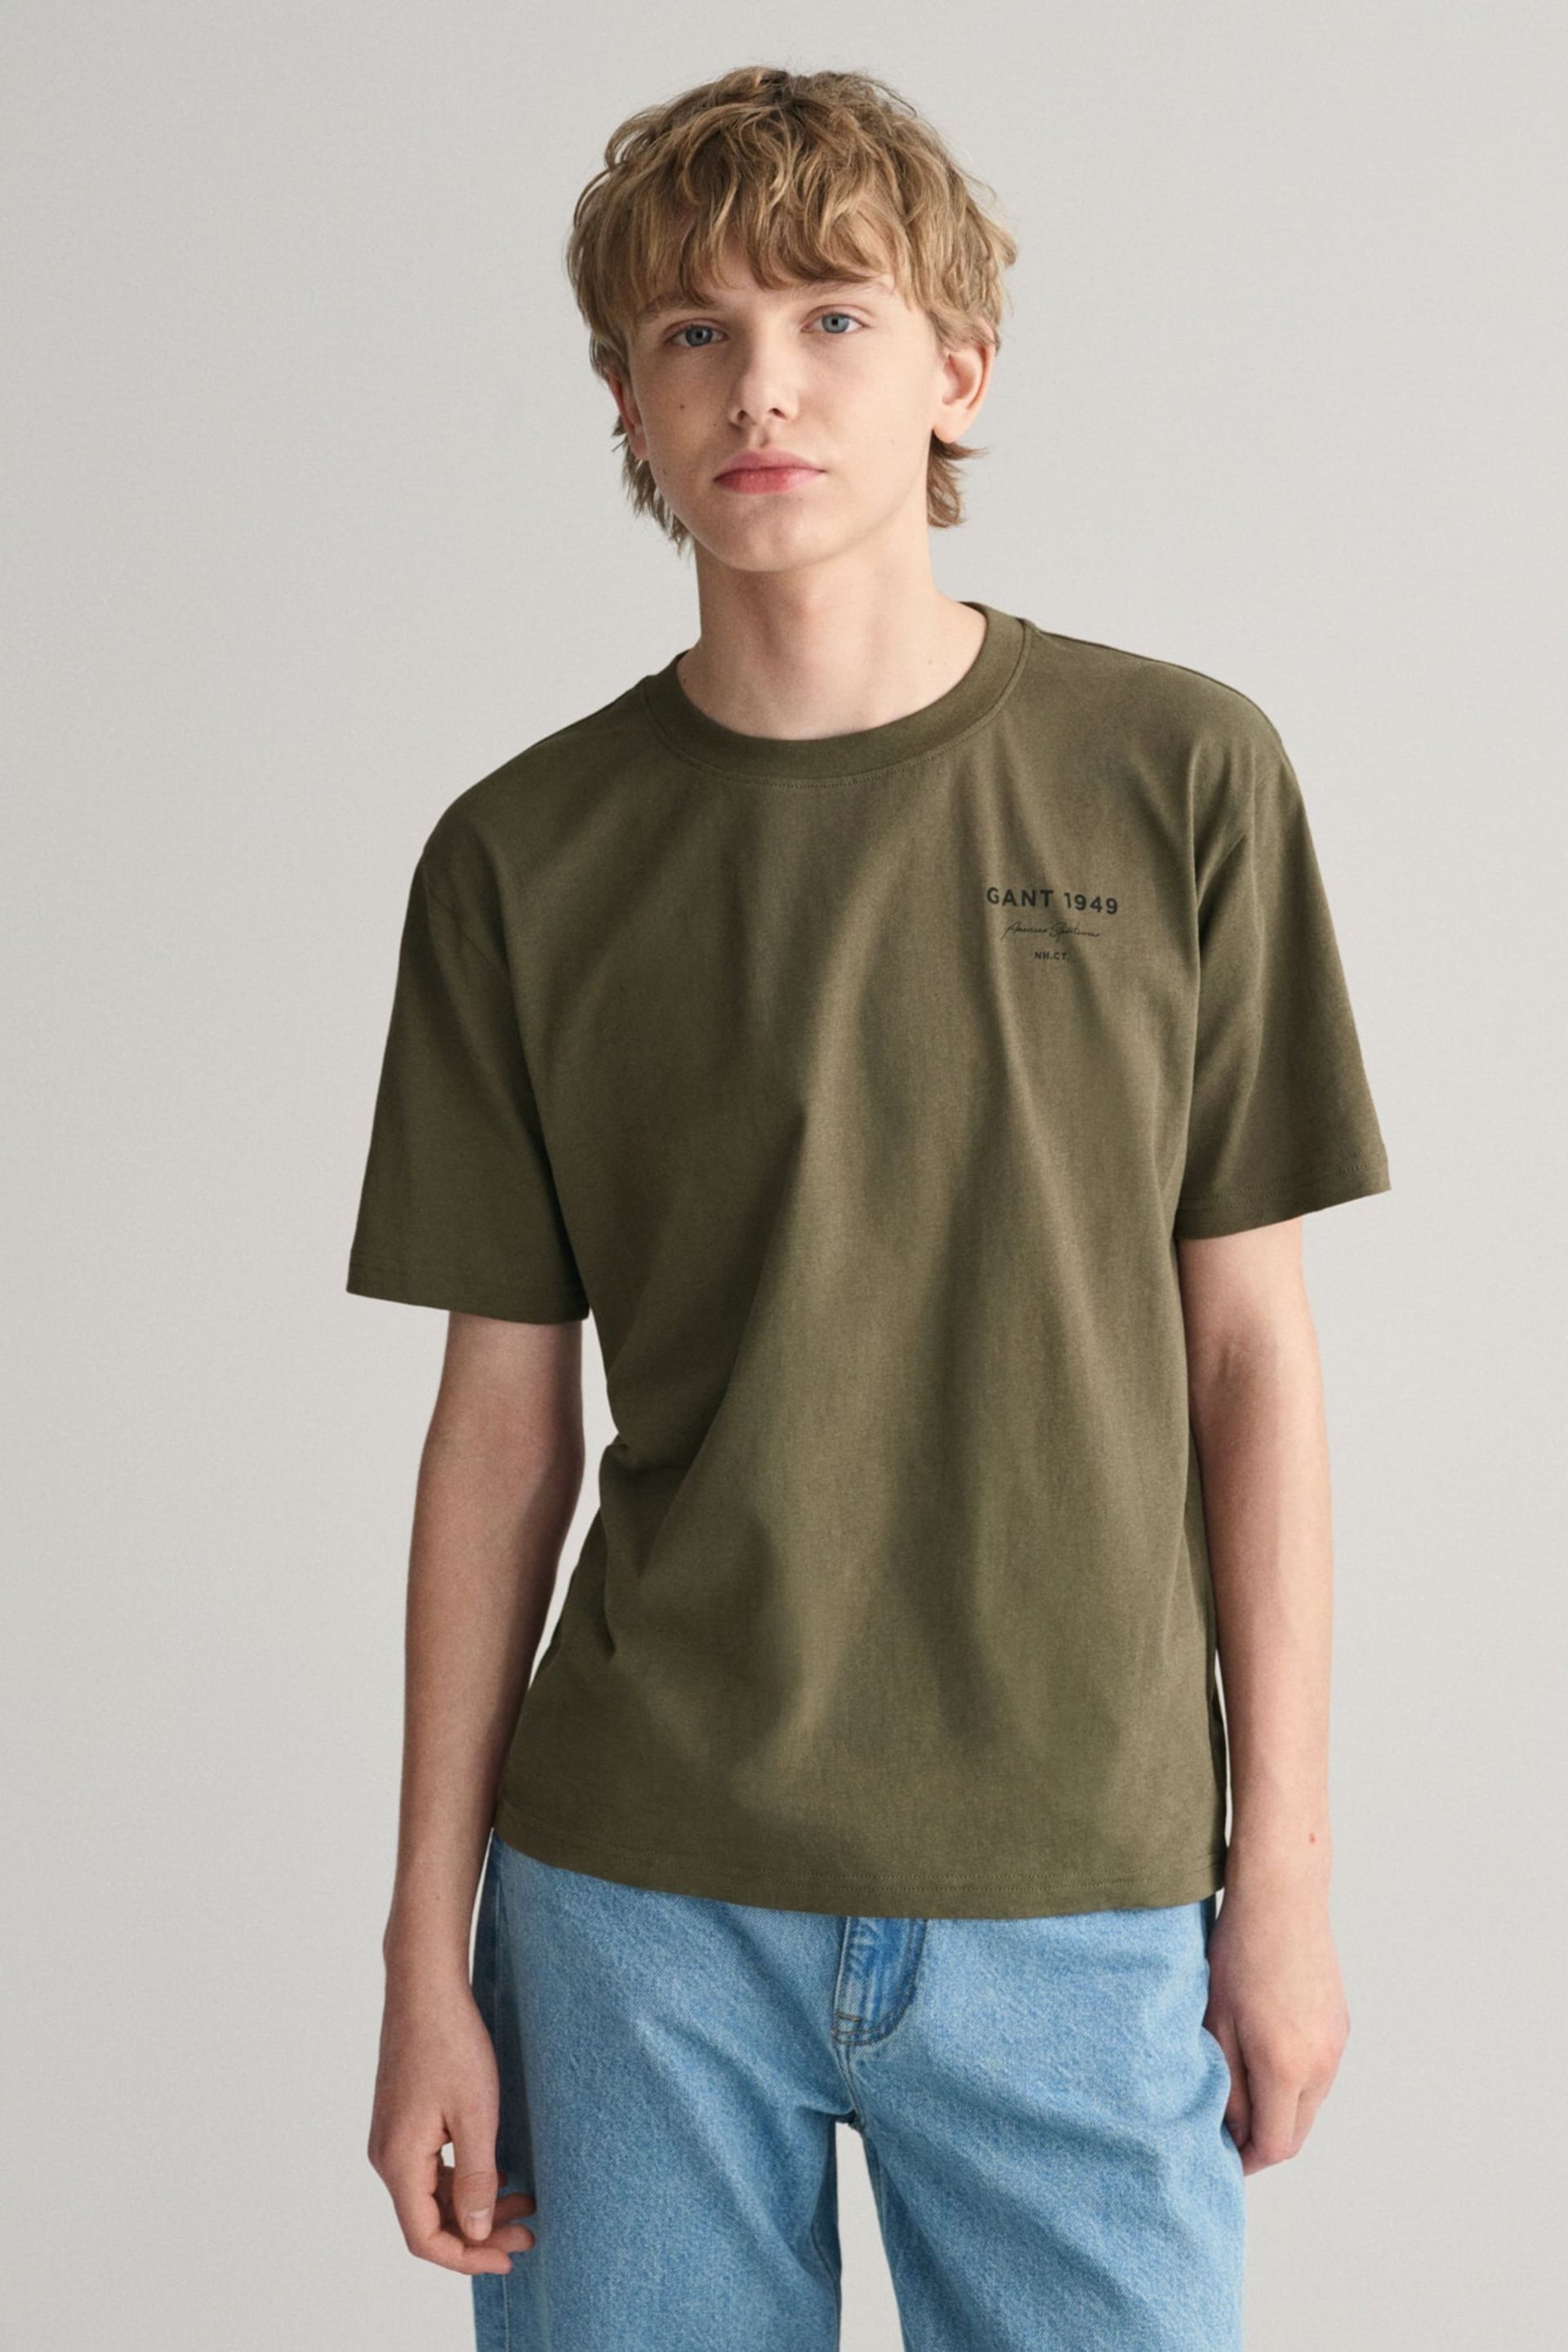 GANT Green Teens Script Graphic T-Shirt - Image 1 of 4